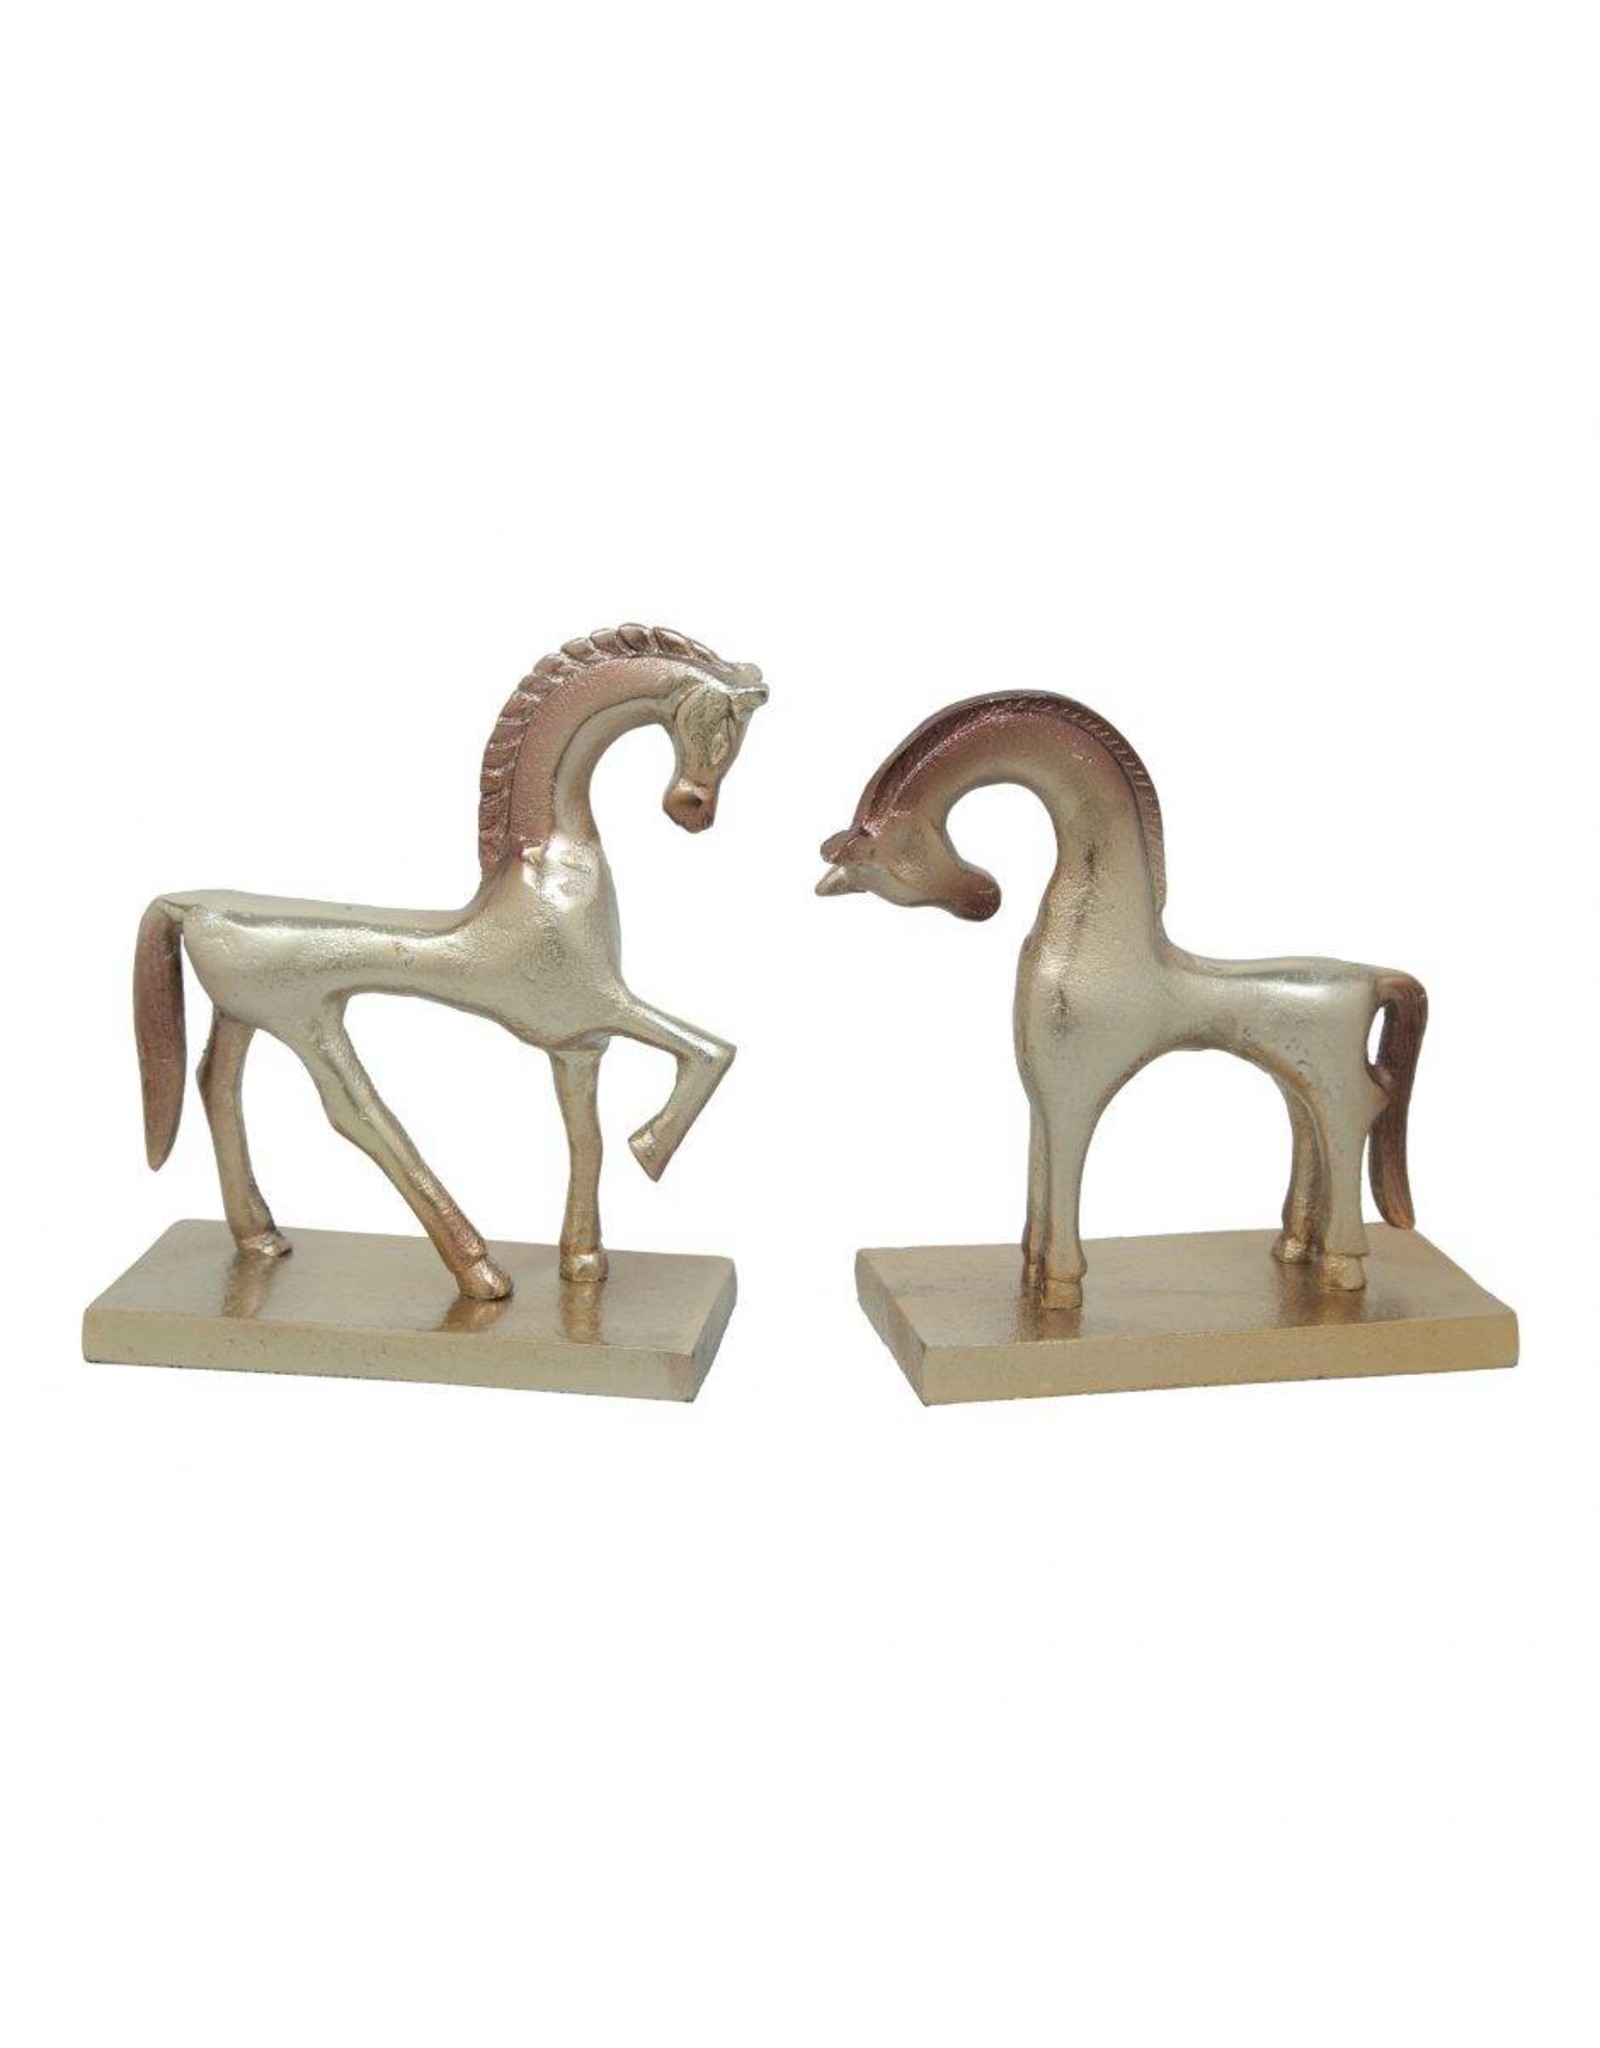 Monroe & Kent APOLLO AND ARTEMIS HORSE SCULPTURES SET OF TWO